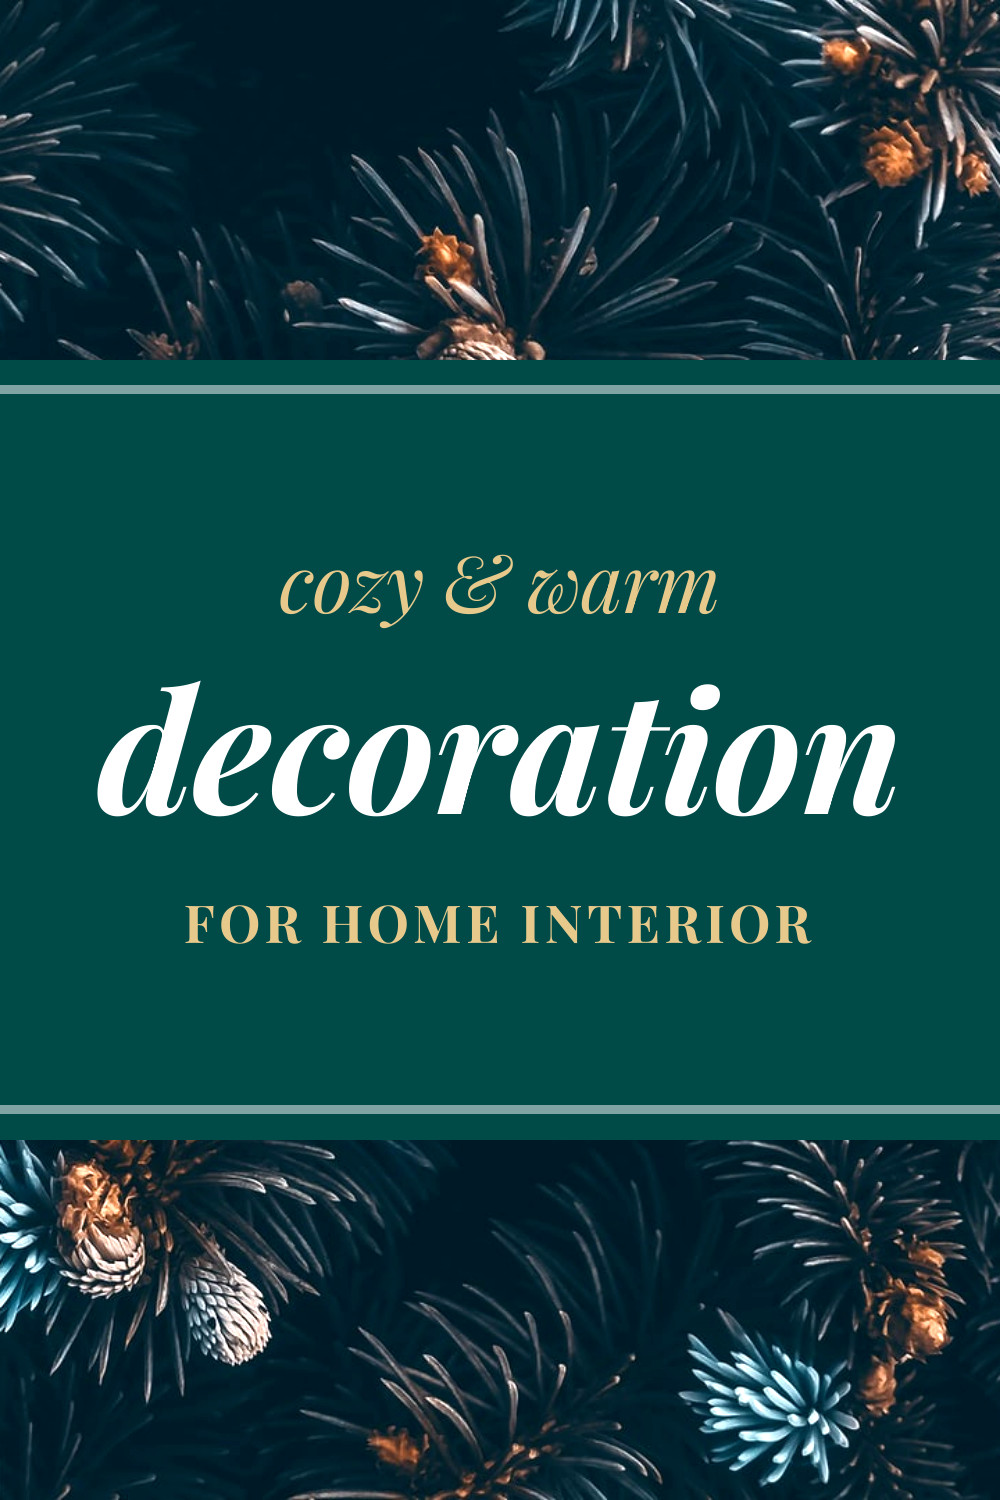 Cozy Christmas Home Decoration Facebook Cover 820x360